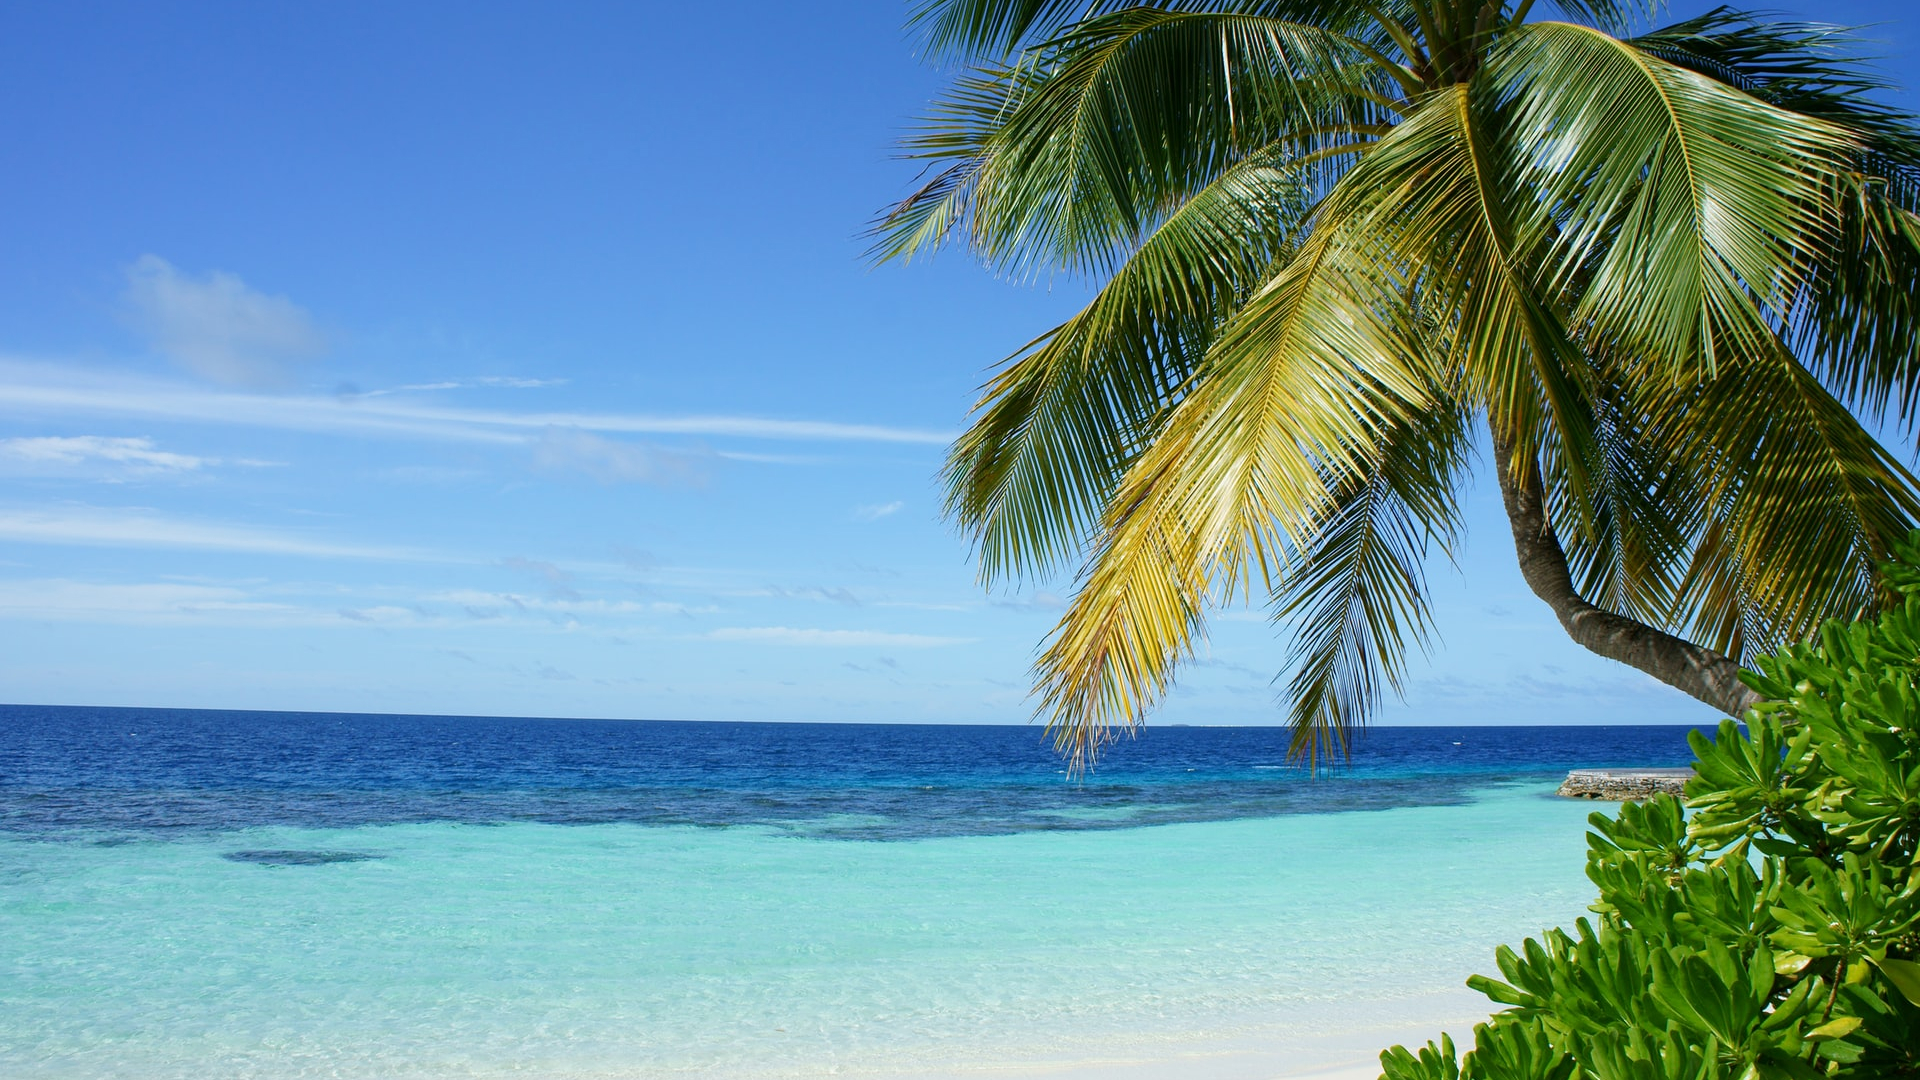 Maldives Sky & Sea with Coconut Tree